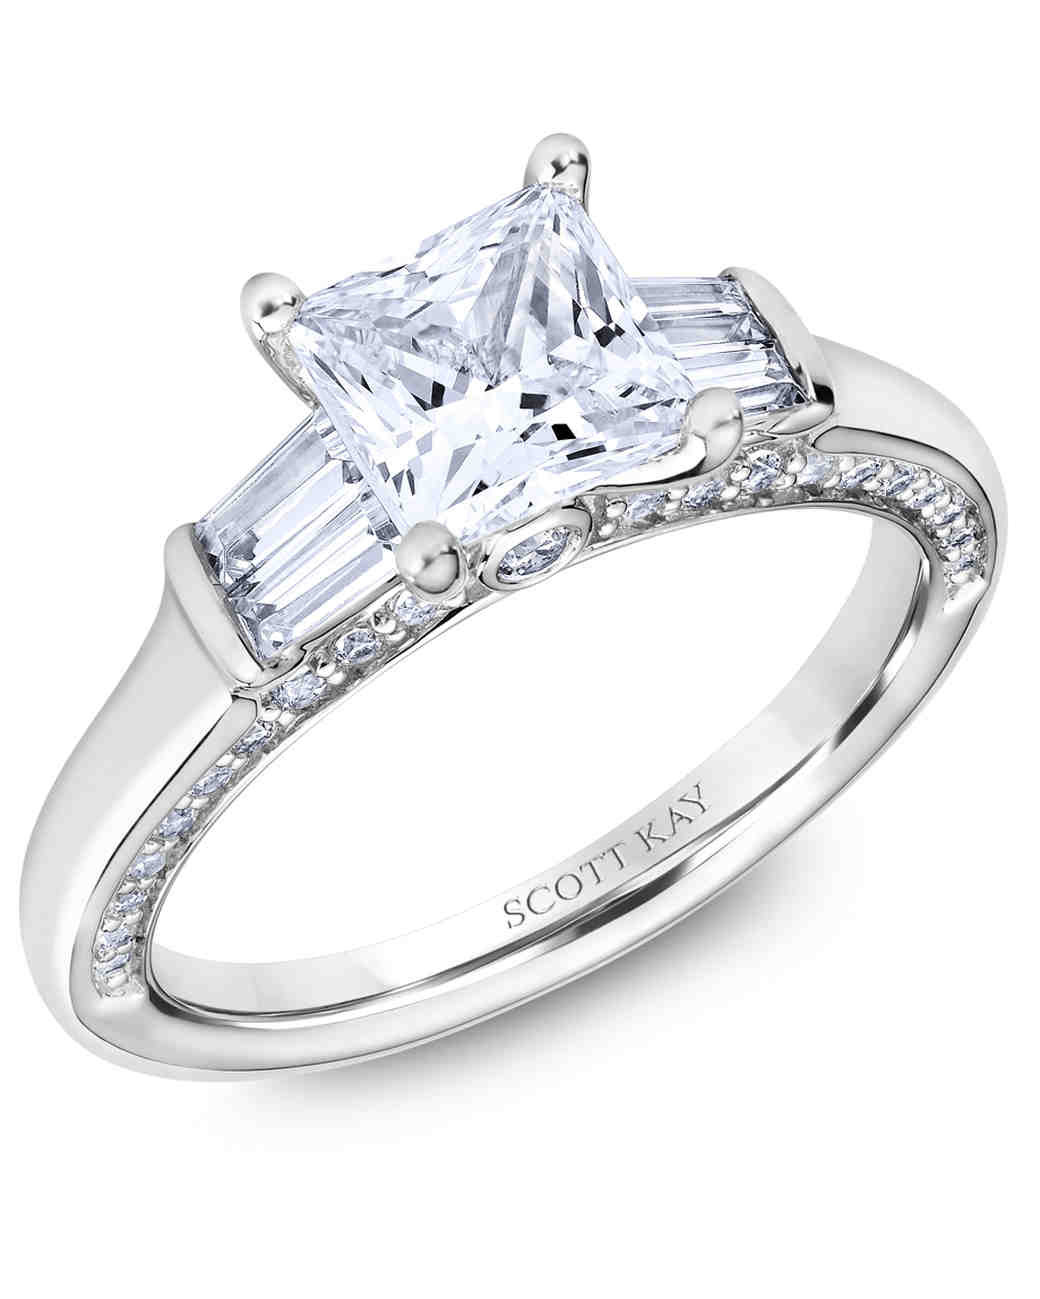 Princes Cut Wedding Rings
 30 Princess Cut Diamond Engagement Rings We Love